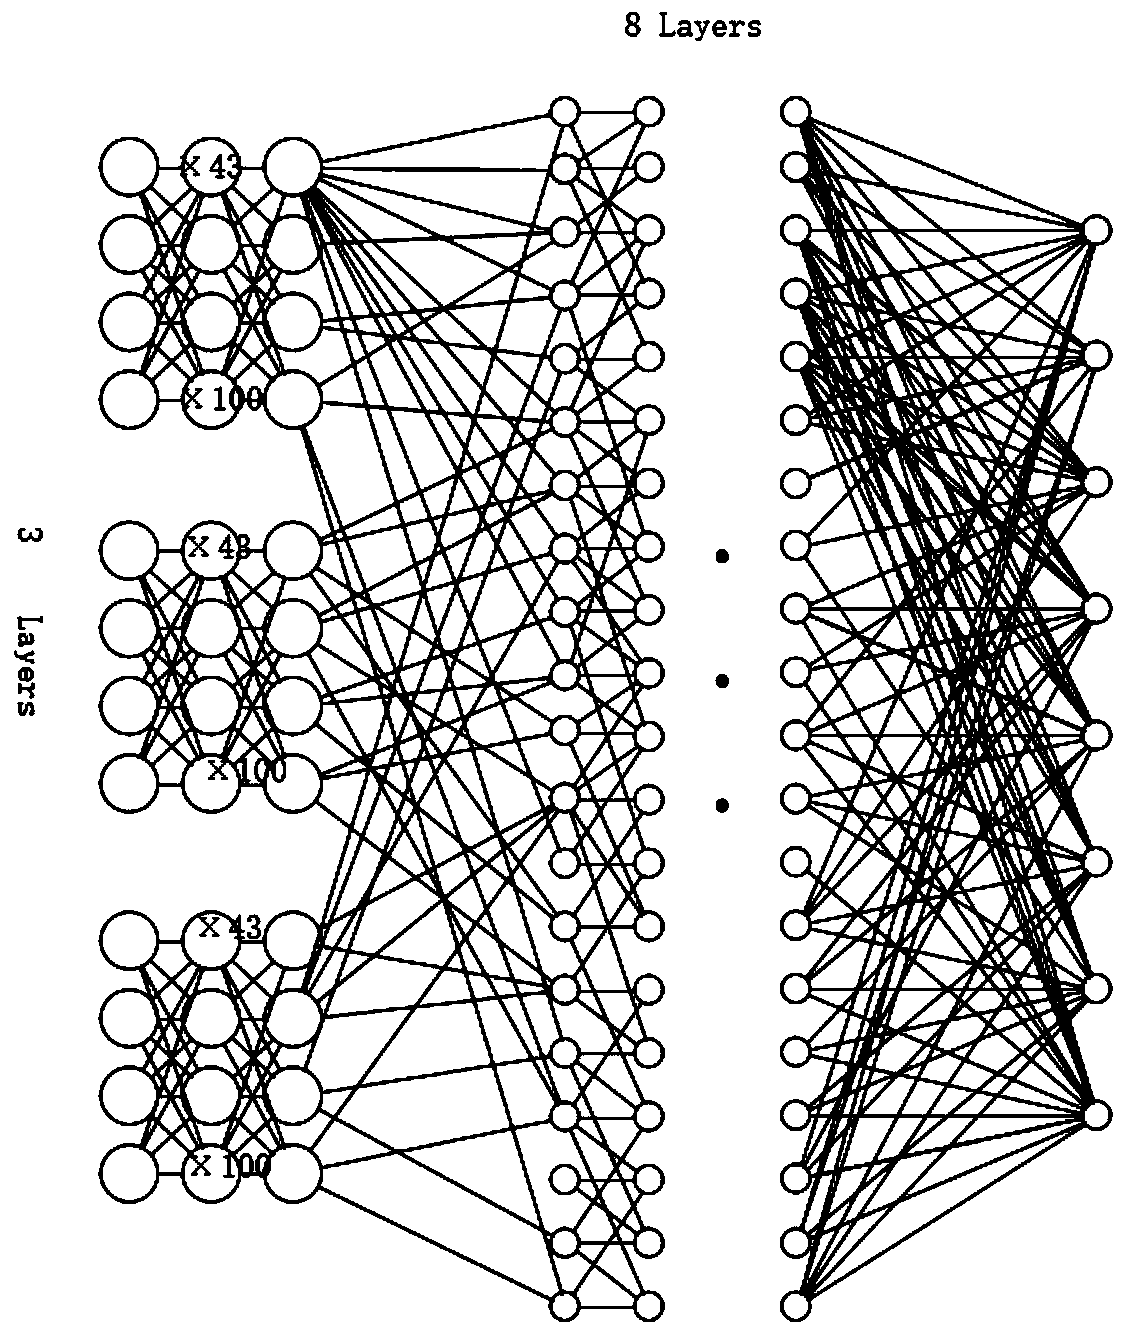 Nanostructure design method based on deep learning